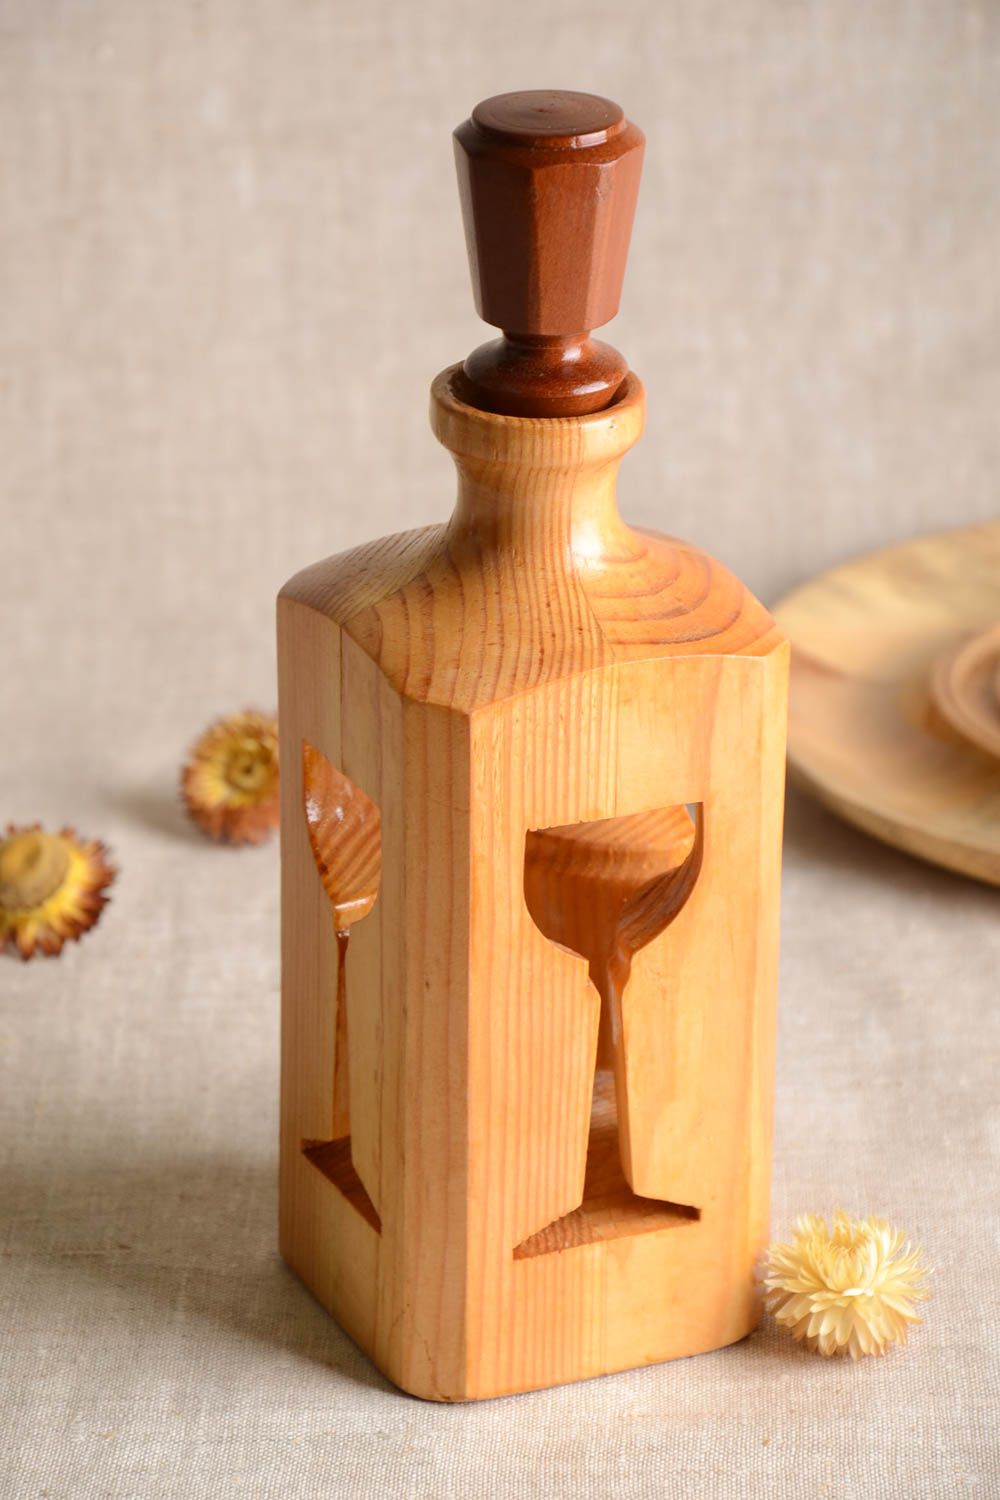 Wooden handmade square bottle for home décor 1 lb photo 1